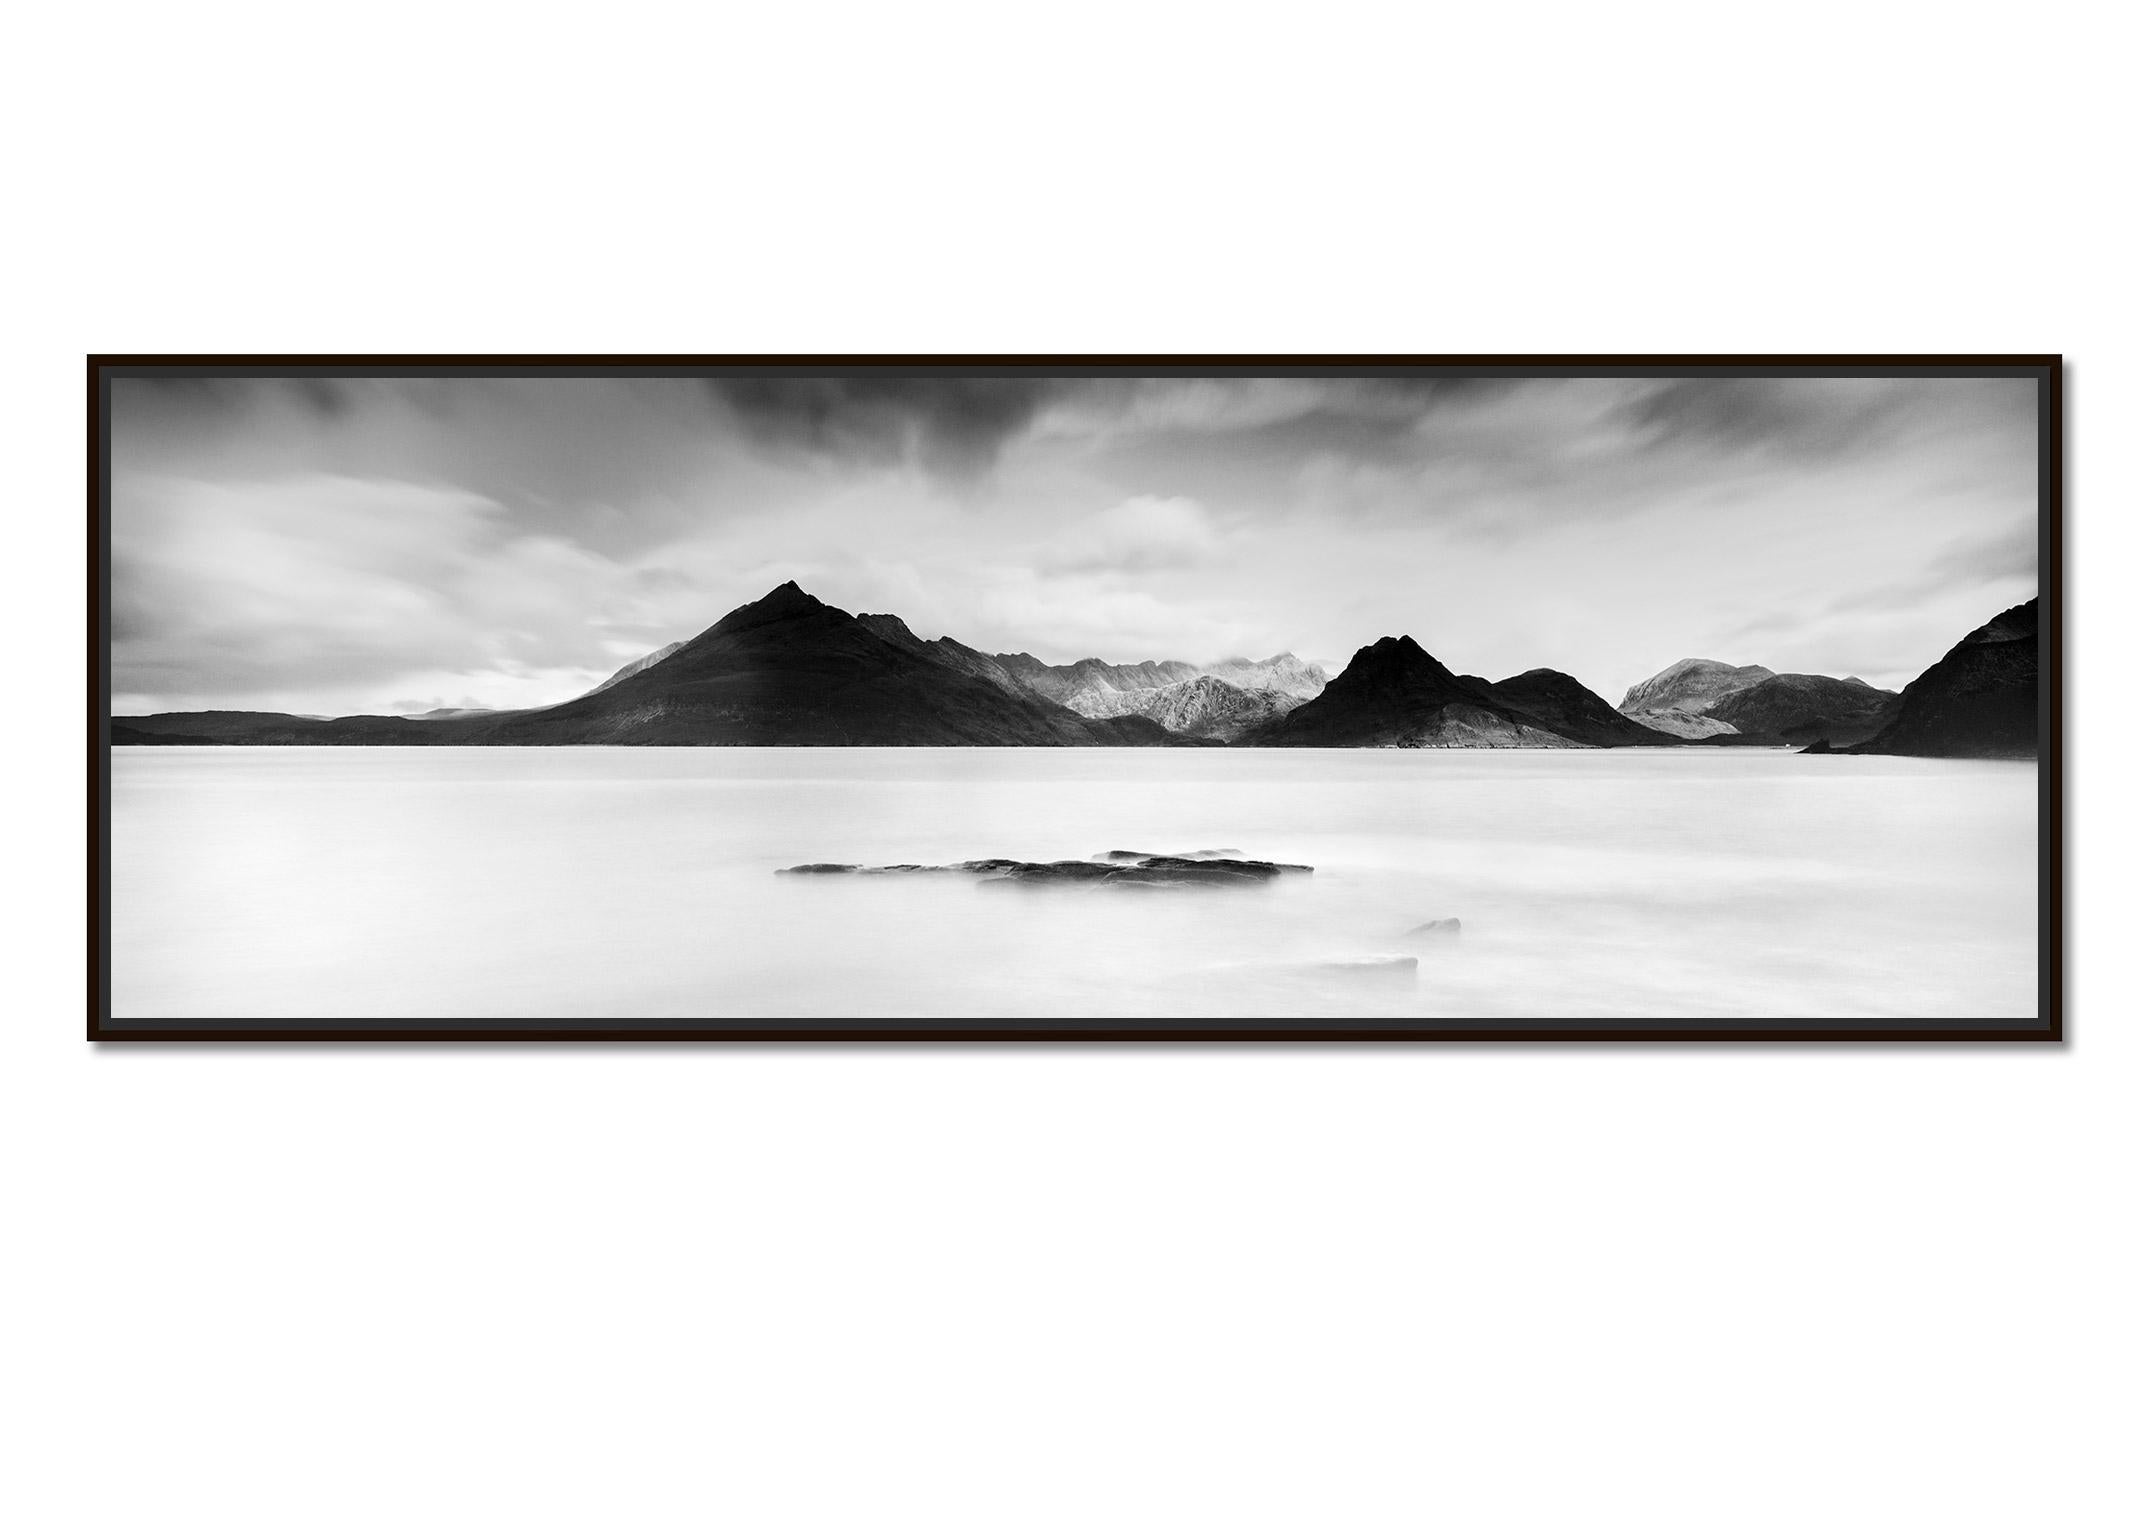 Black Mountains long exposure Scotland black white art landscape photography - Photograph by Gerald Berghammer